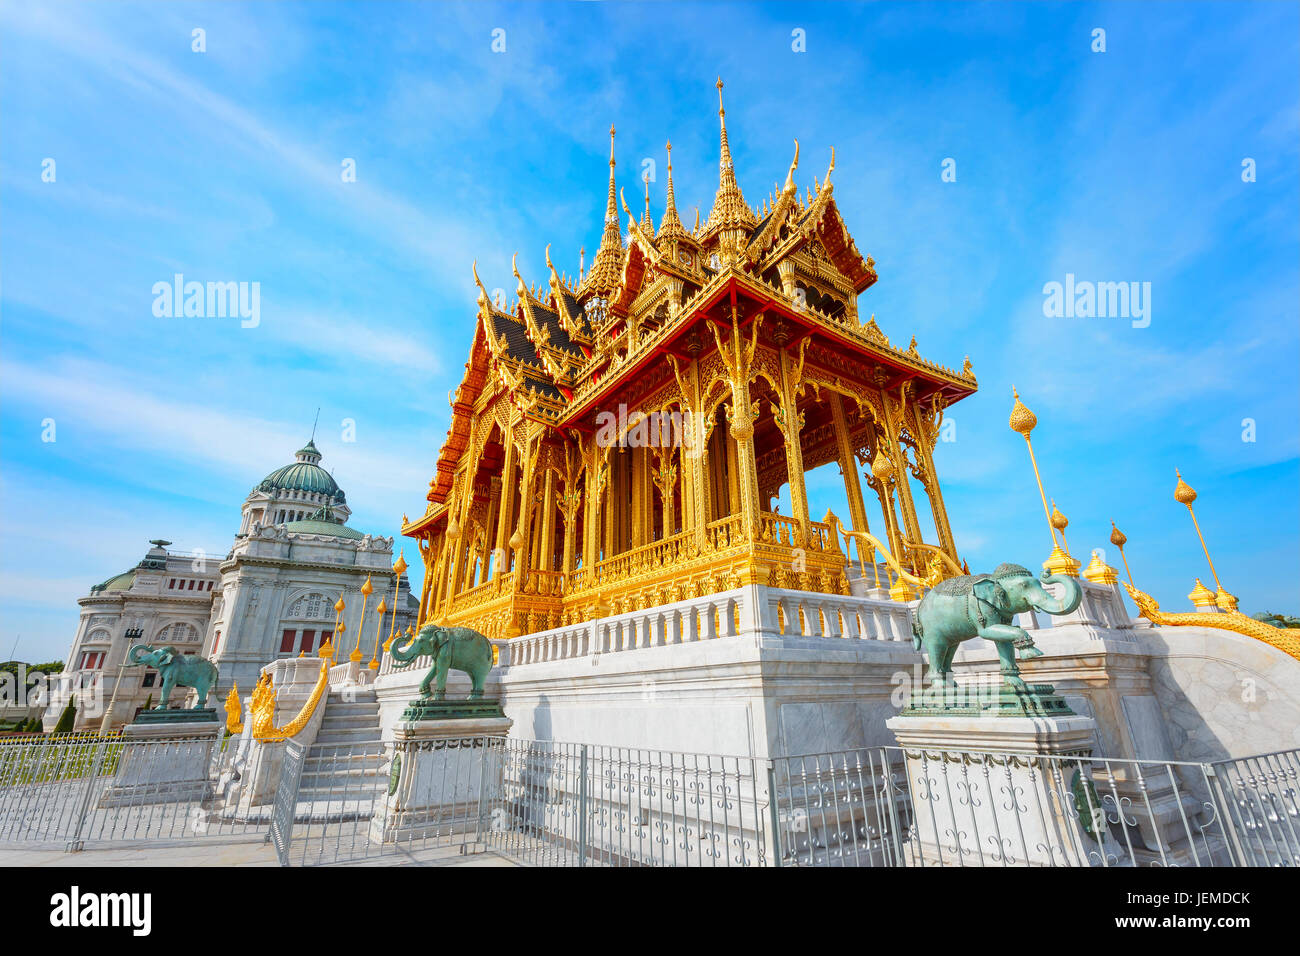 Ananta Samakhom Throne Hall with Barom Mangalanusarani Pavilion at the Royal Dusit Palace in Bangkok, Thailand Stock Photo